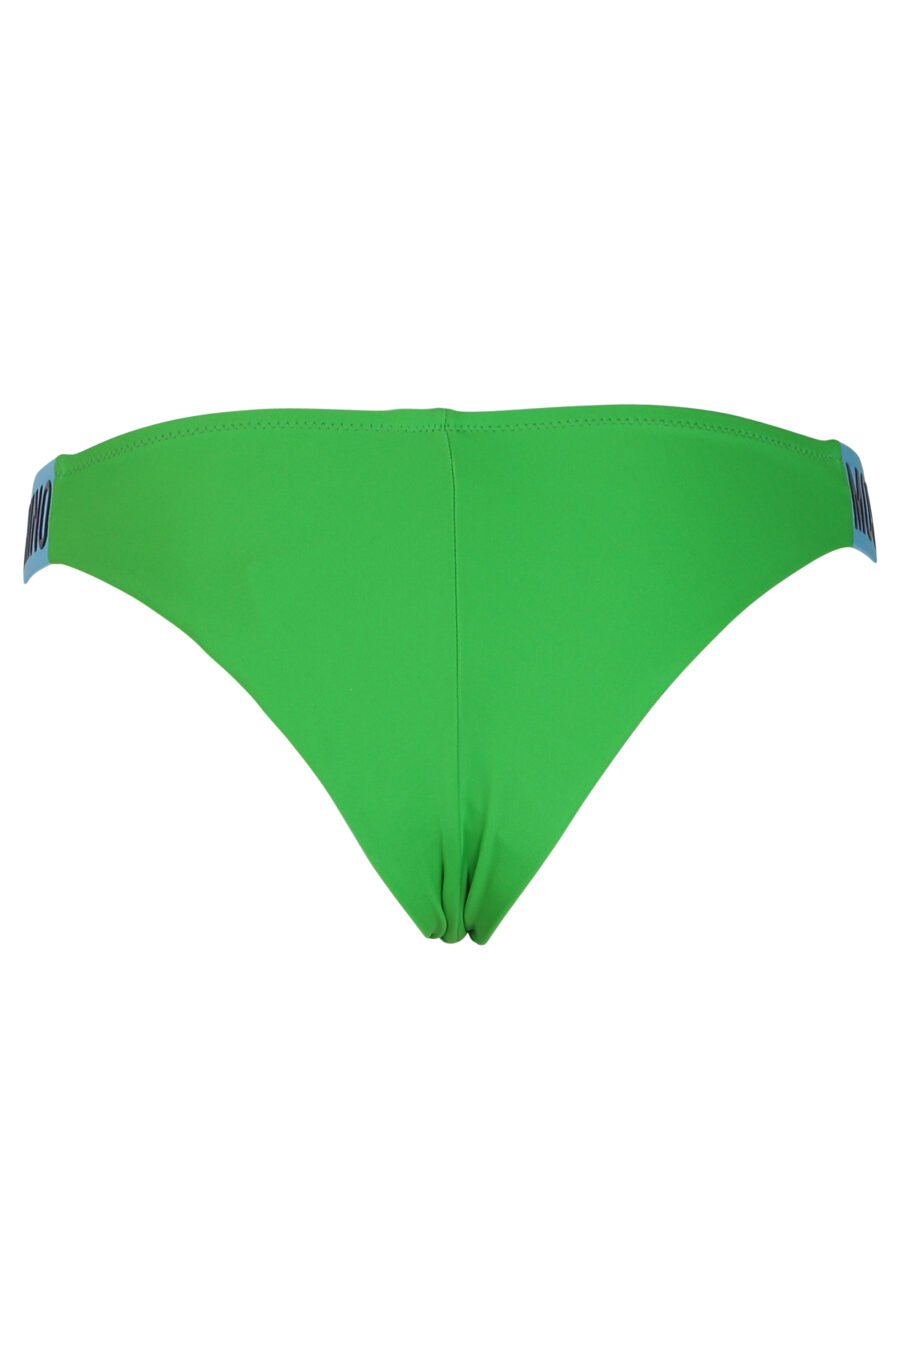 Bas de bikini vert avec logo sur la bande latérale - IMG 0314